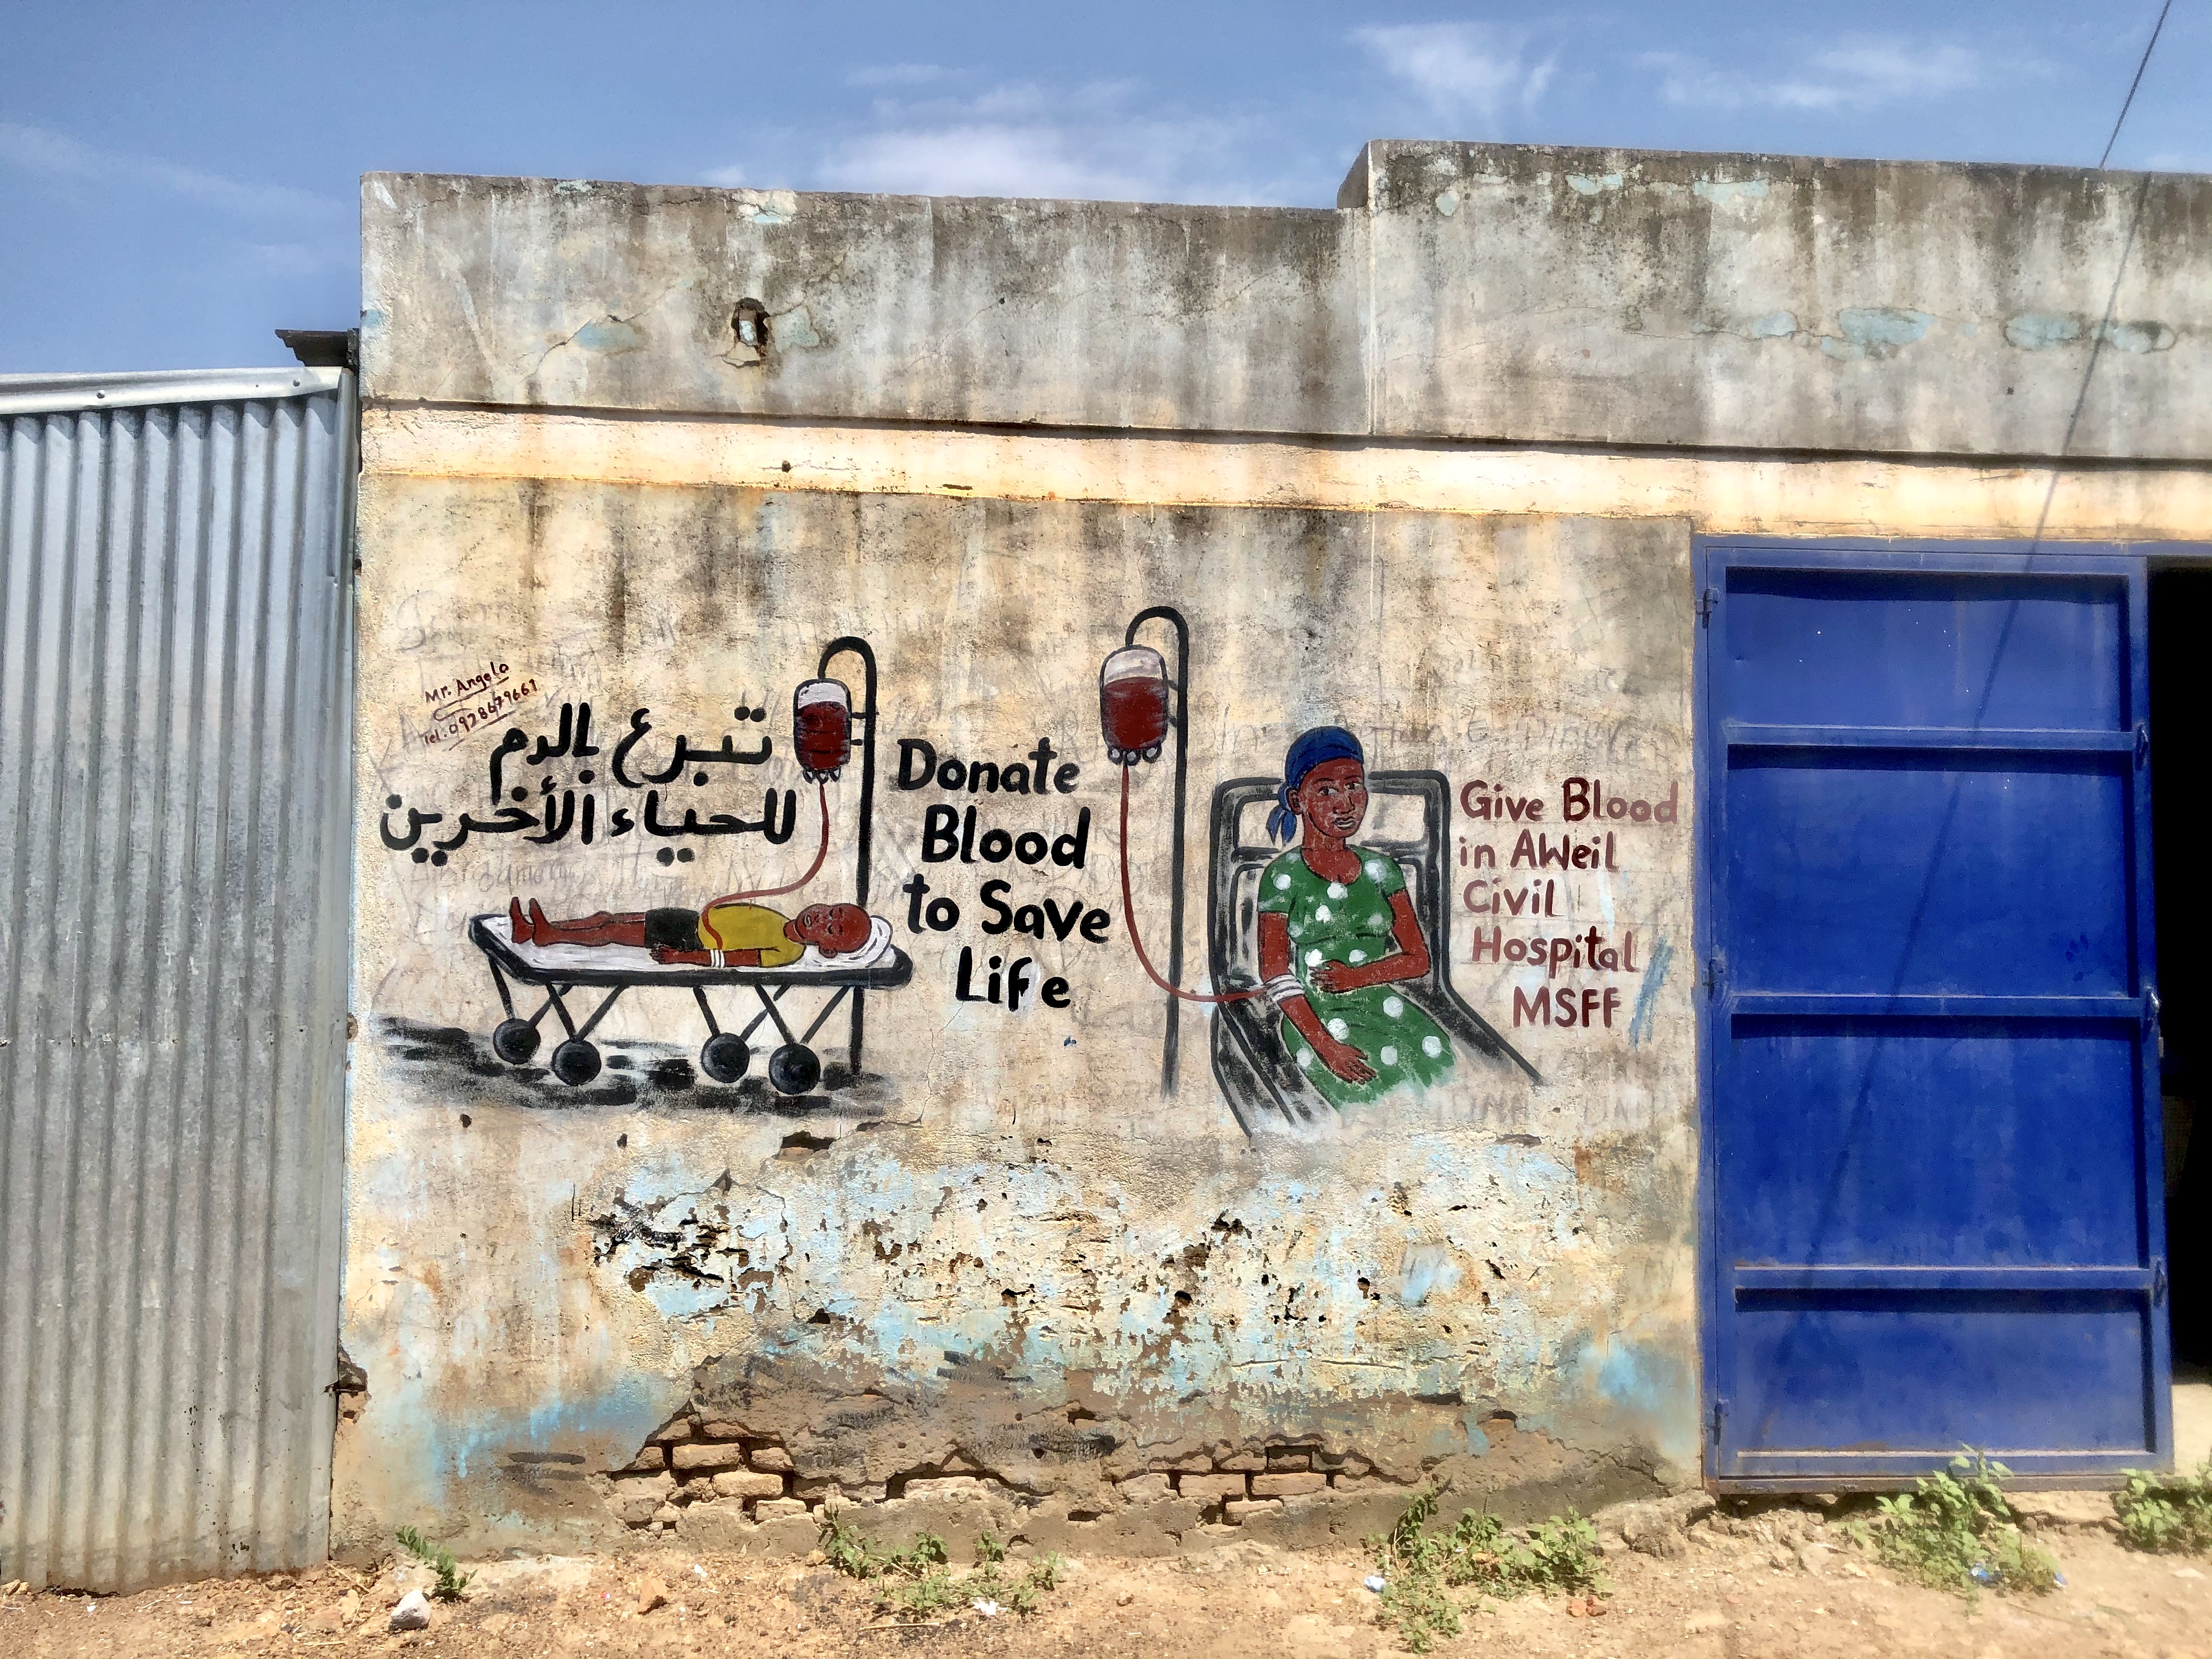 img_5052_donate-blood_msf-malaria-team-town-wall-art.jpg